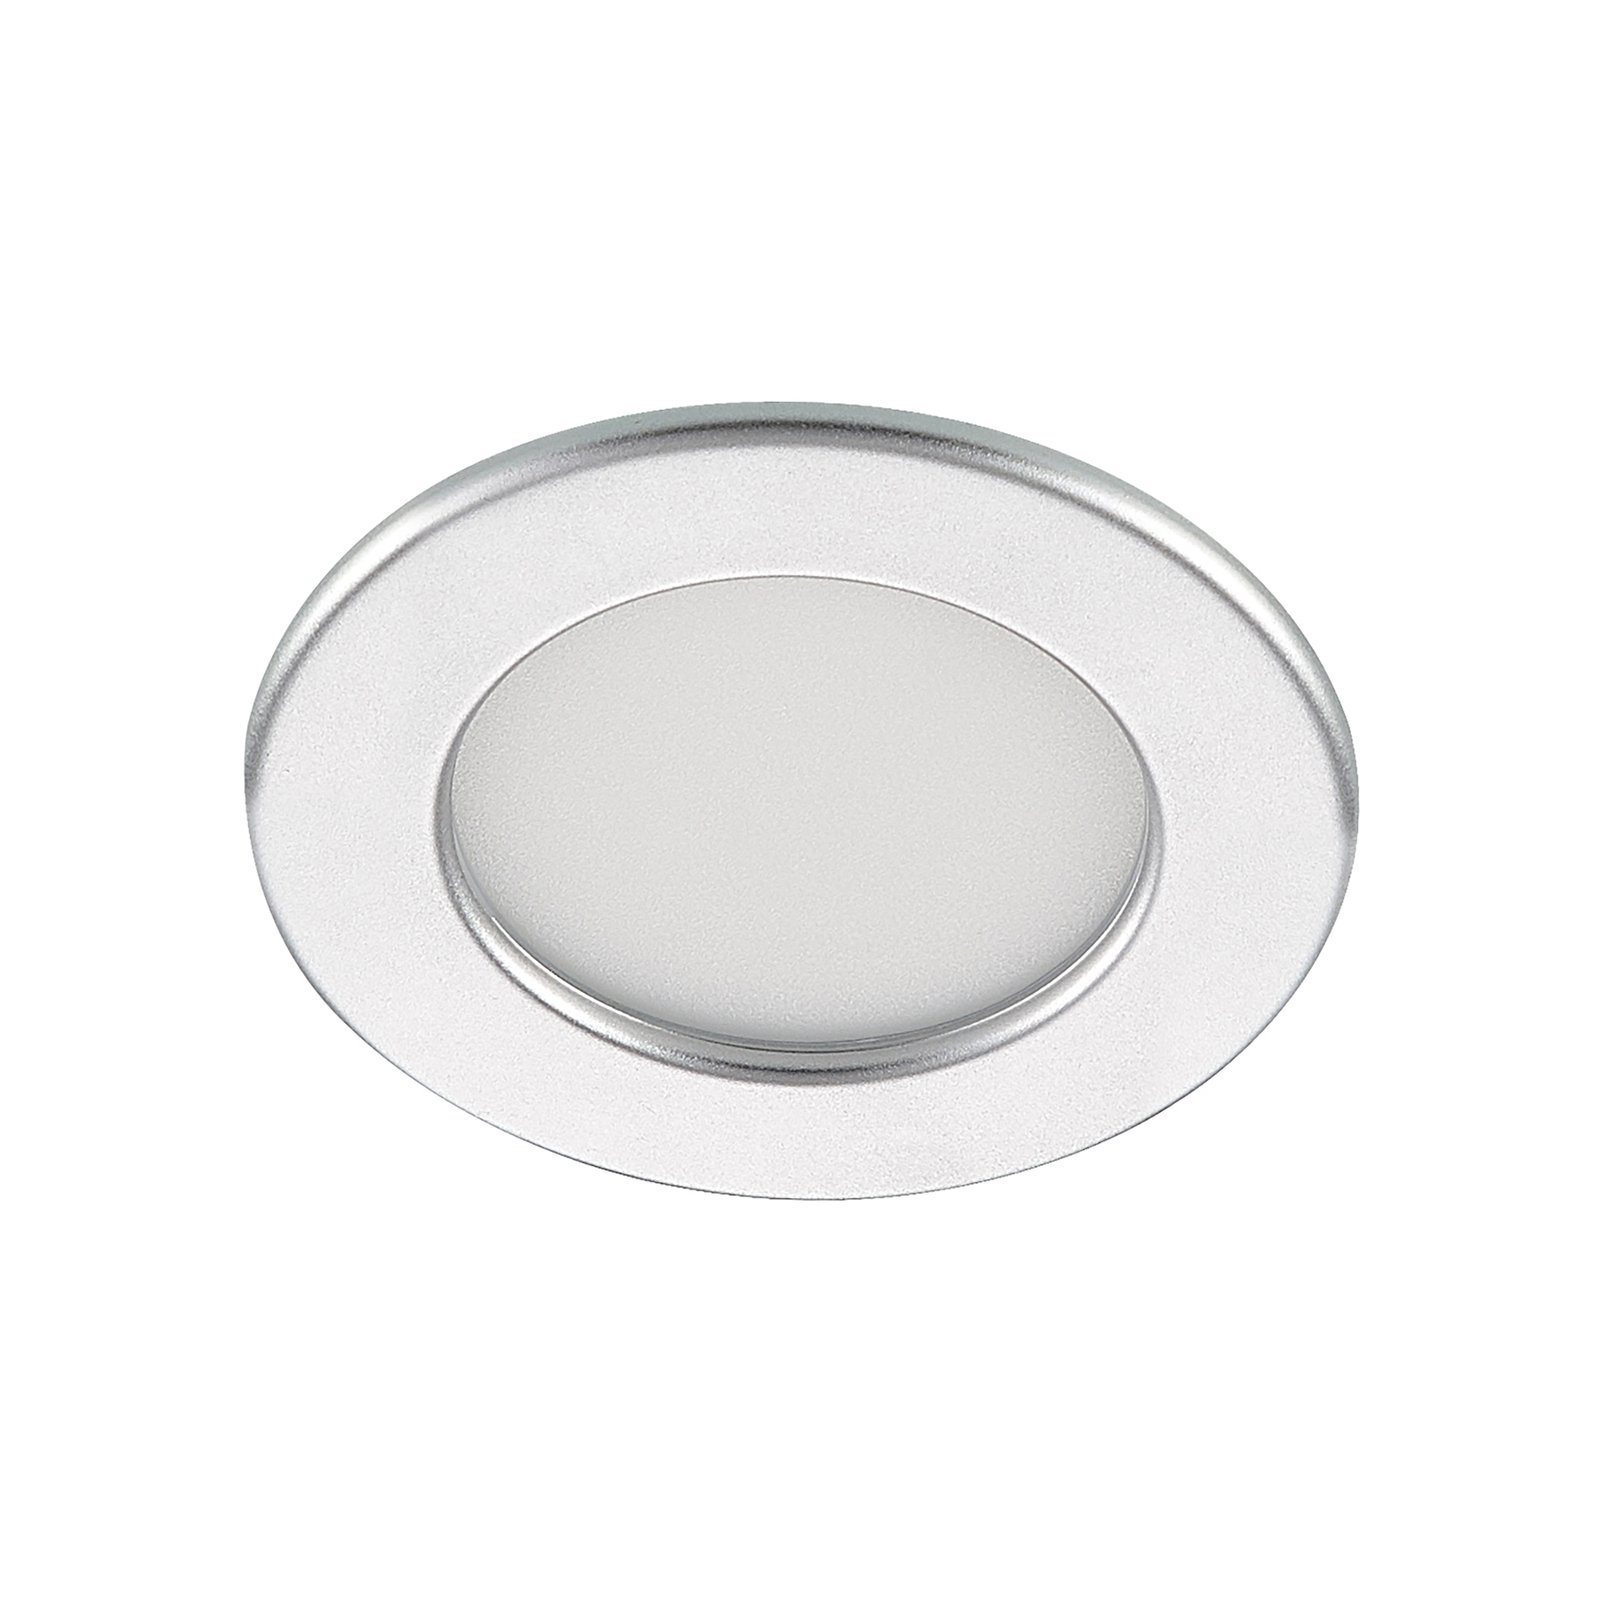 Prios Cadance LED inbouwlamp, zilver, 11,5 cm